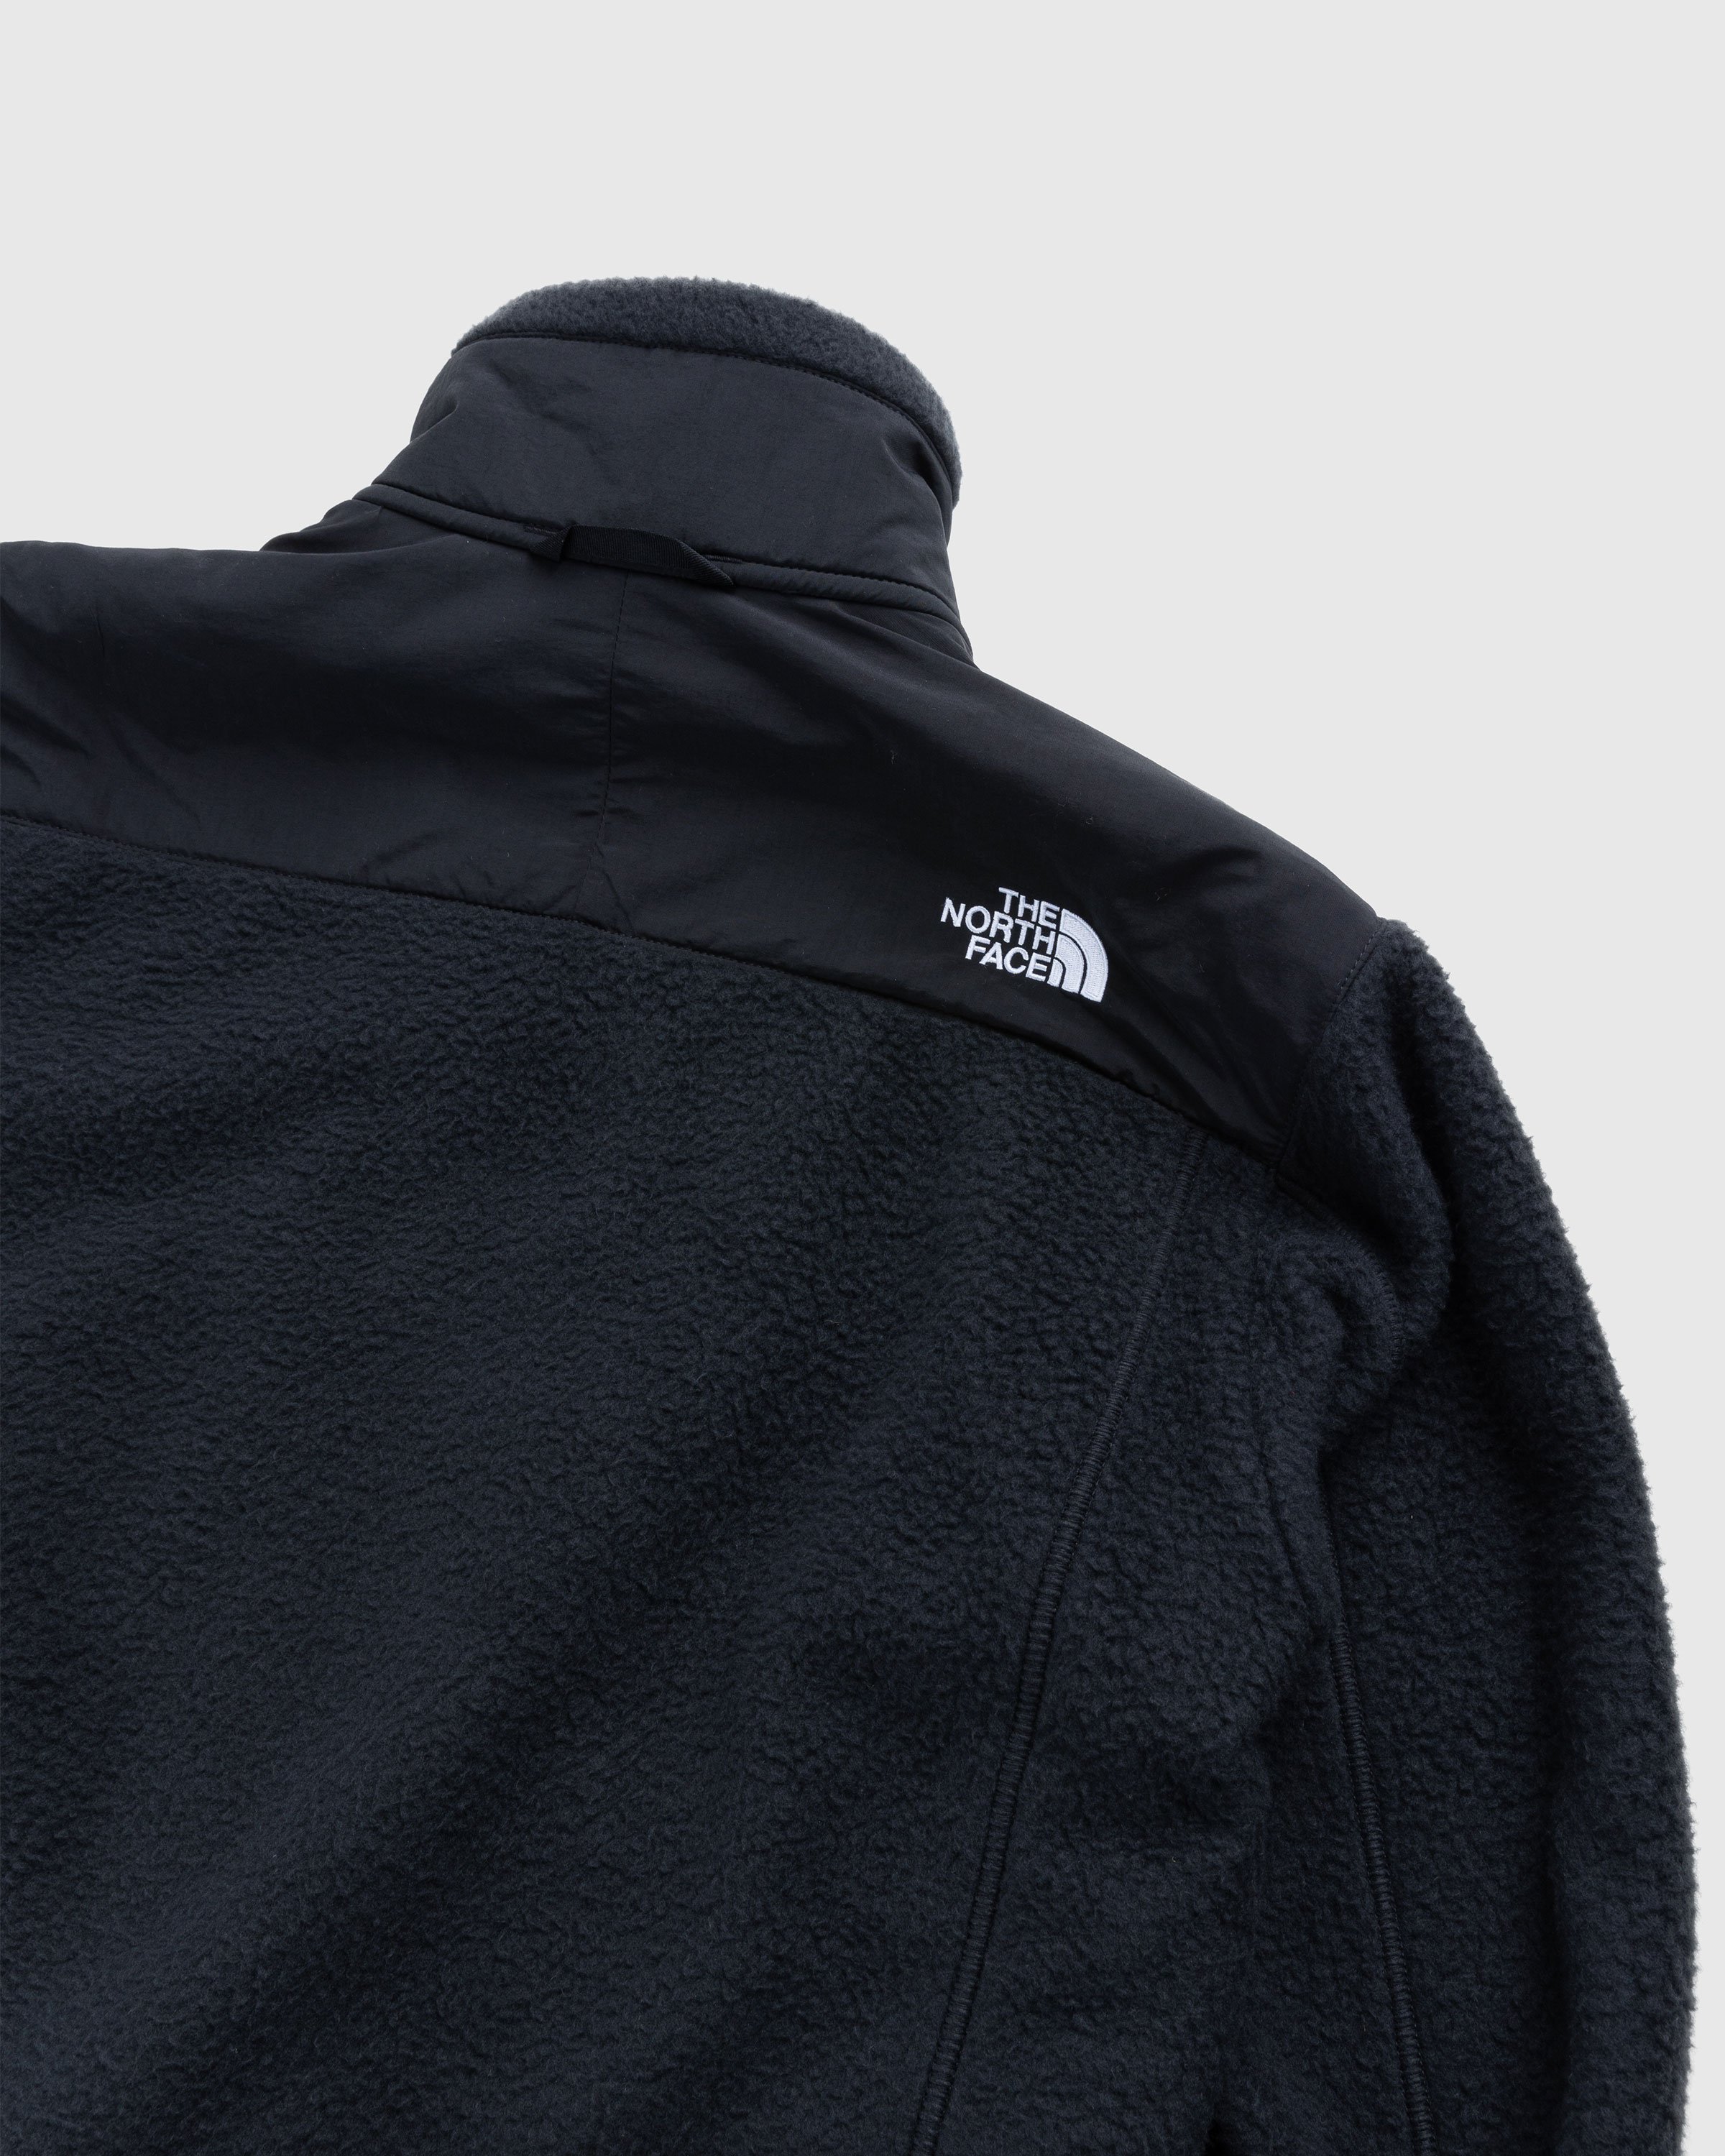 The North Face - '94 High Pile Denali Jacket Black - Clothing - Black - Image 5